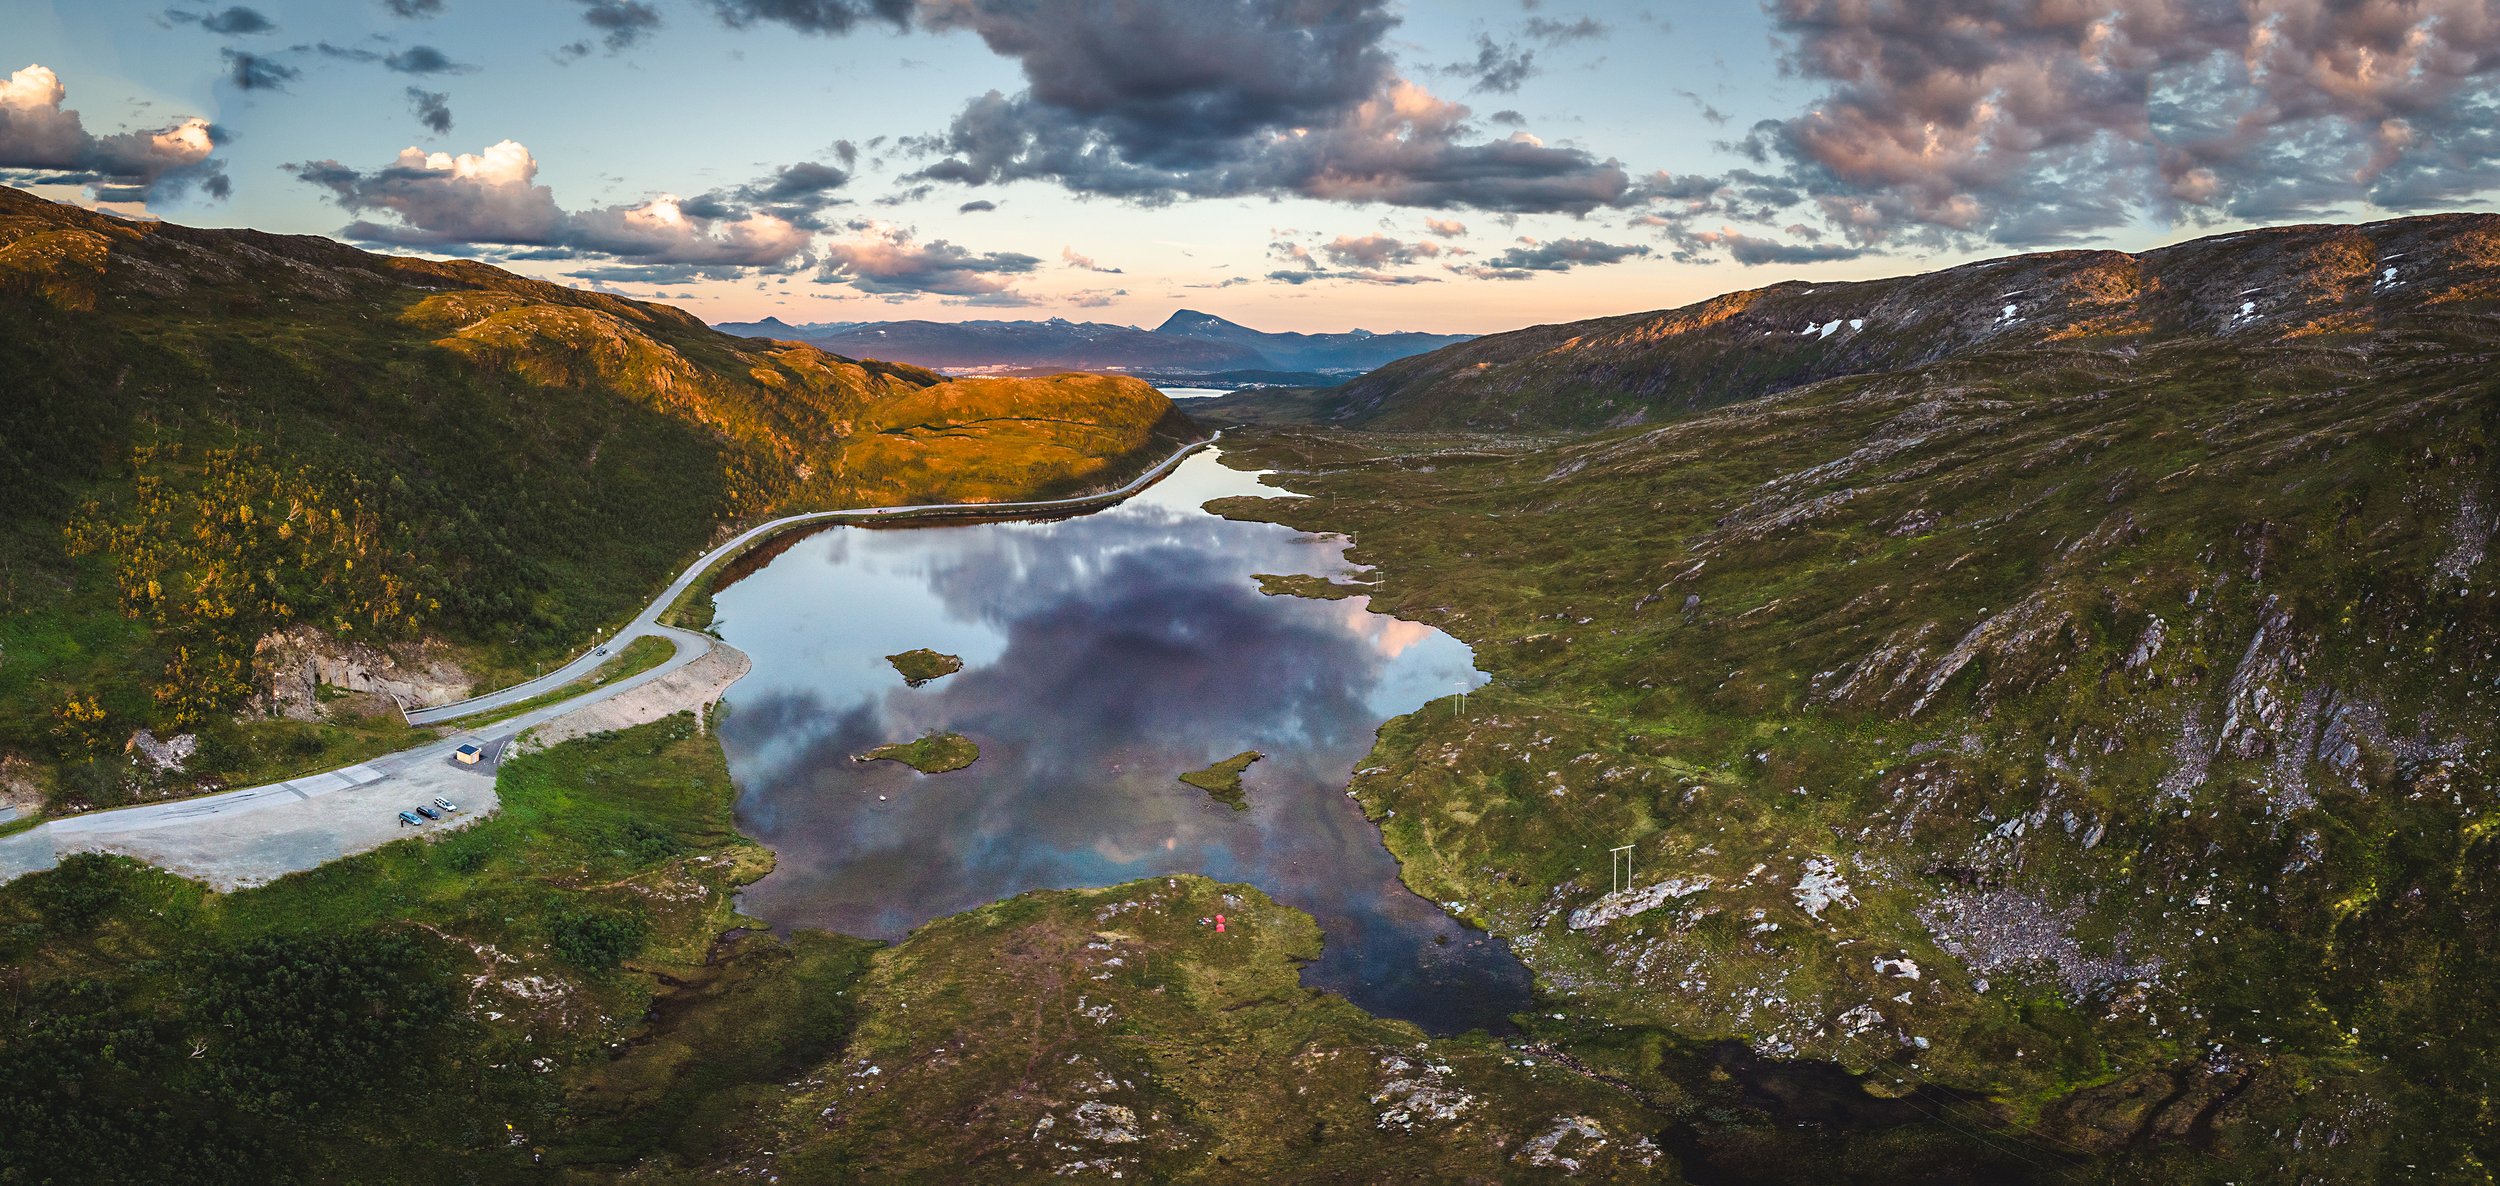 "Norwegian scenery"